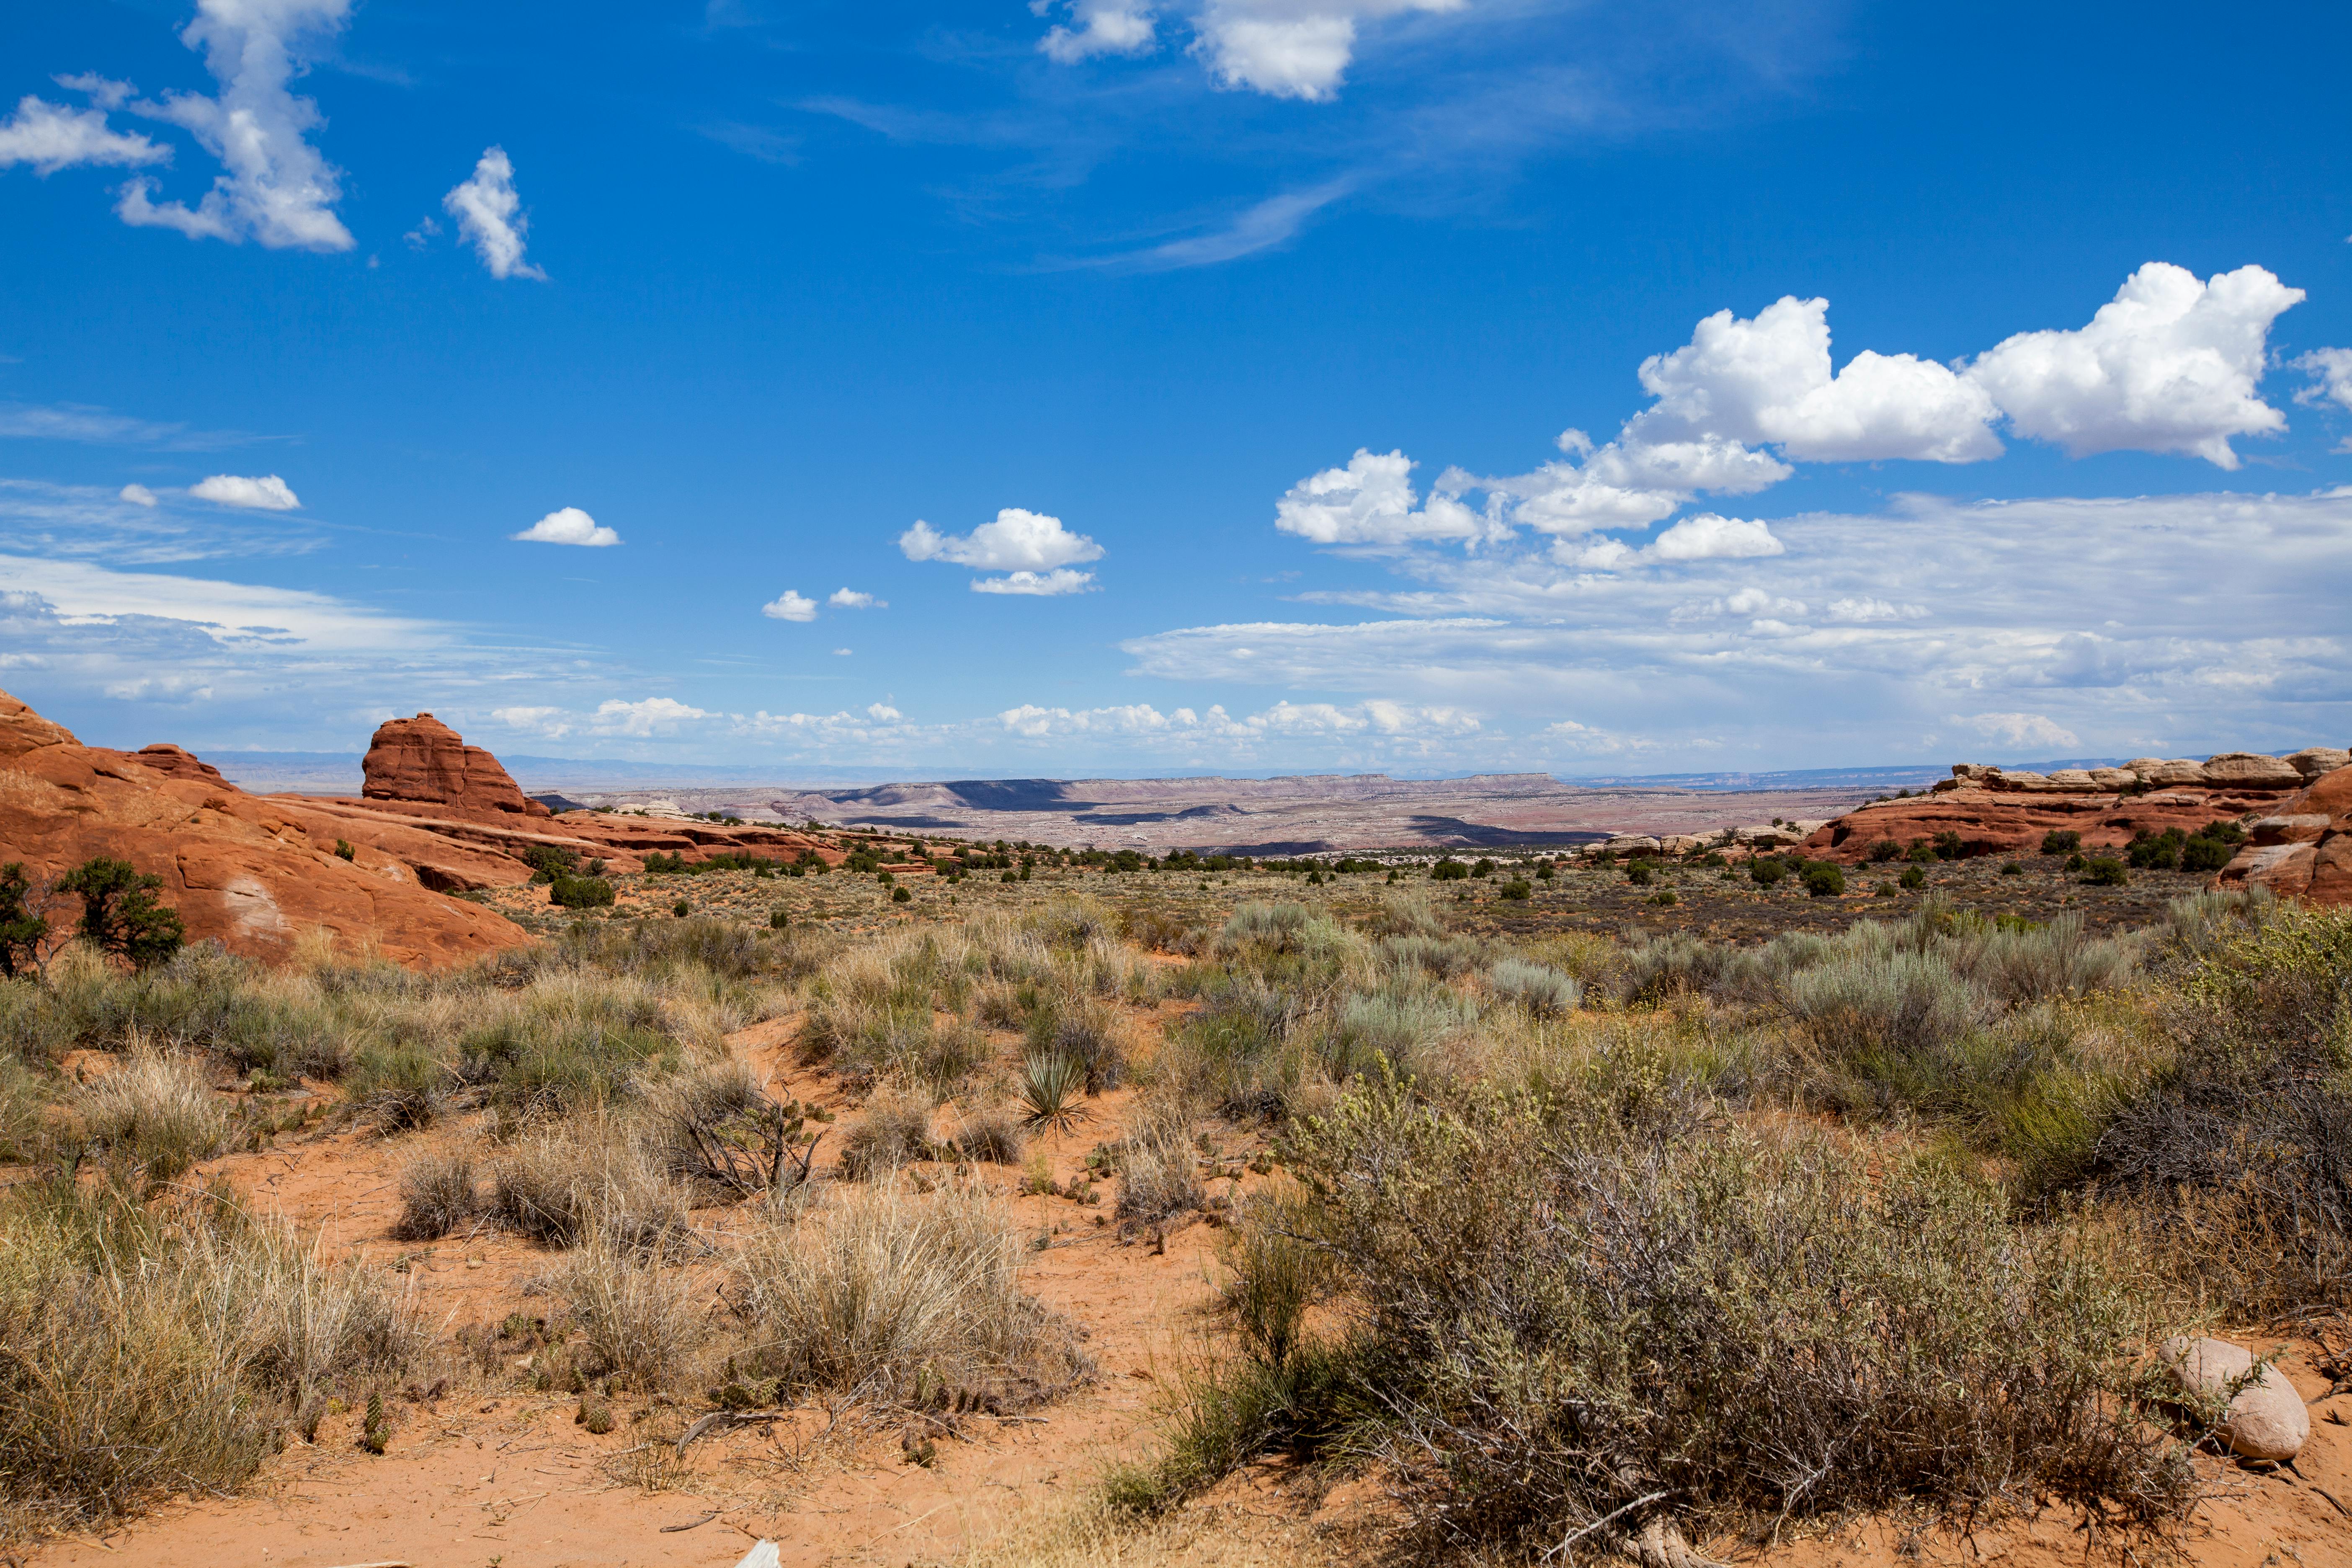 desert landscape under blue skies and white clouds